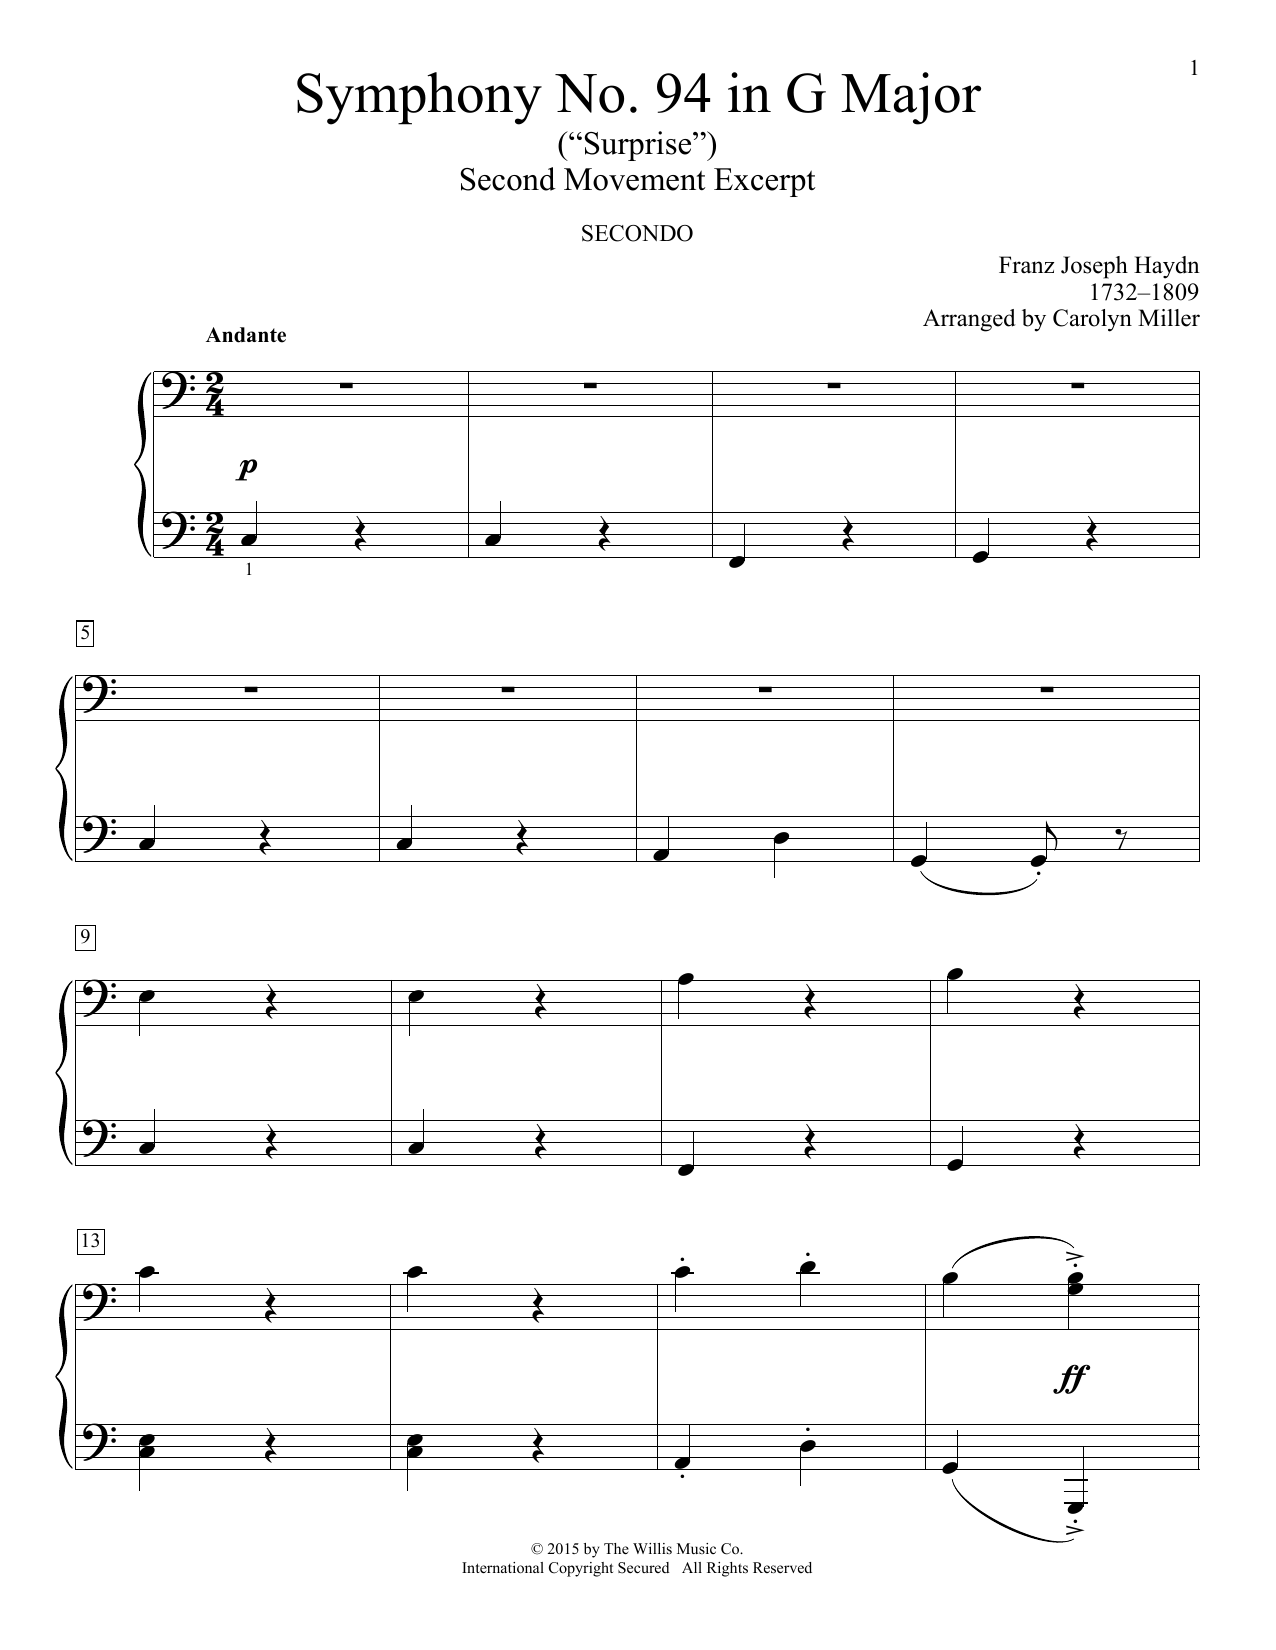 Download Franz Joseph Haydn Symphony No. 94 In G Major (Surprise), Sheet Music